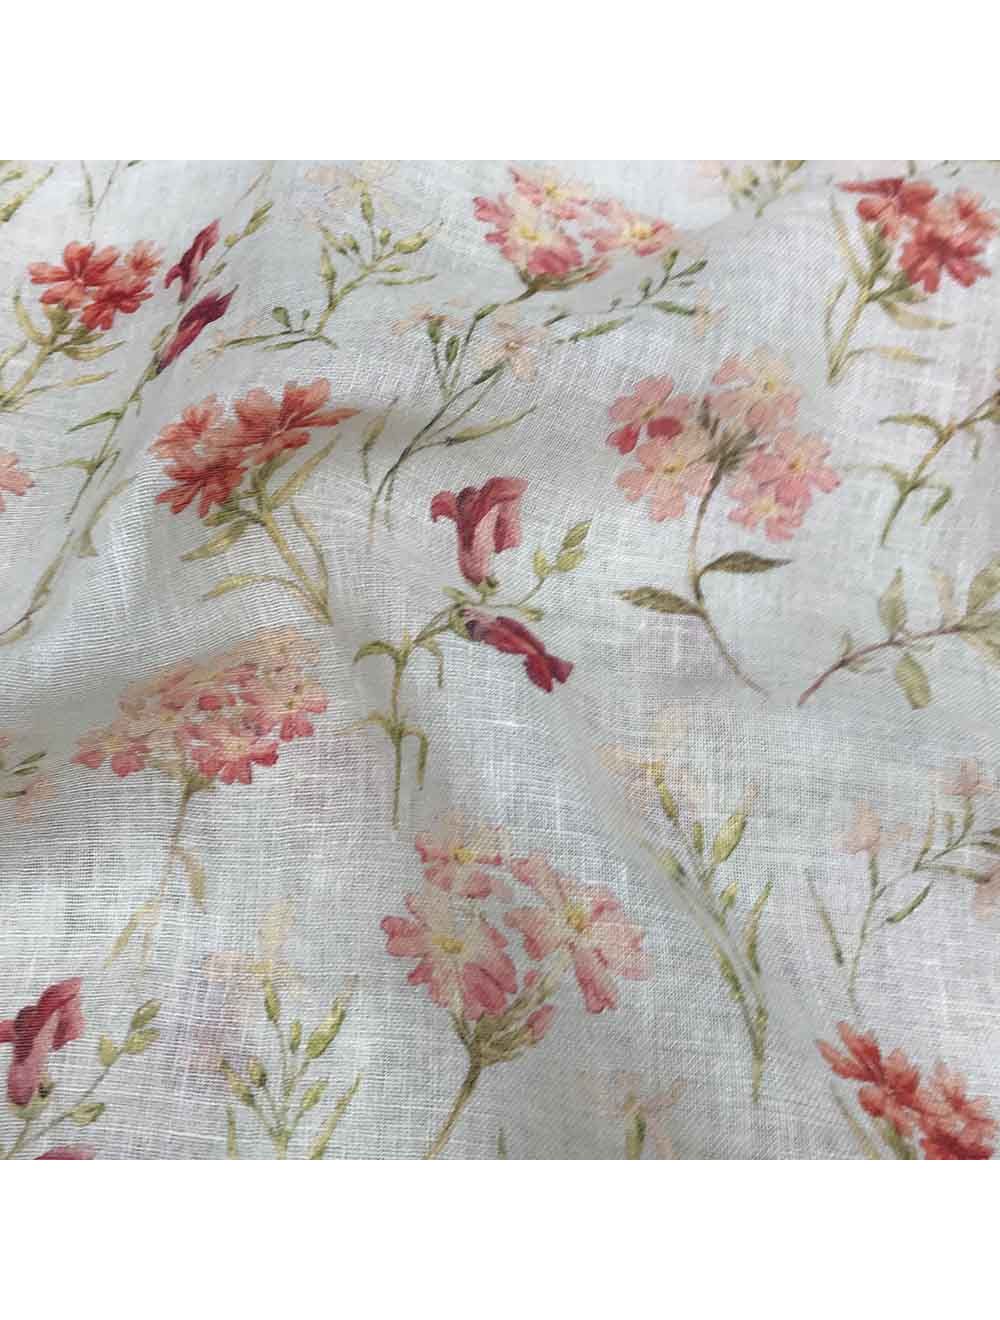 Off-White Linen Multi Color Floral Printed Fabric | Saroj Fabrics